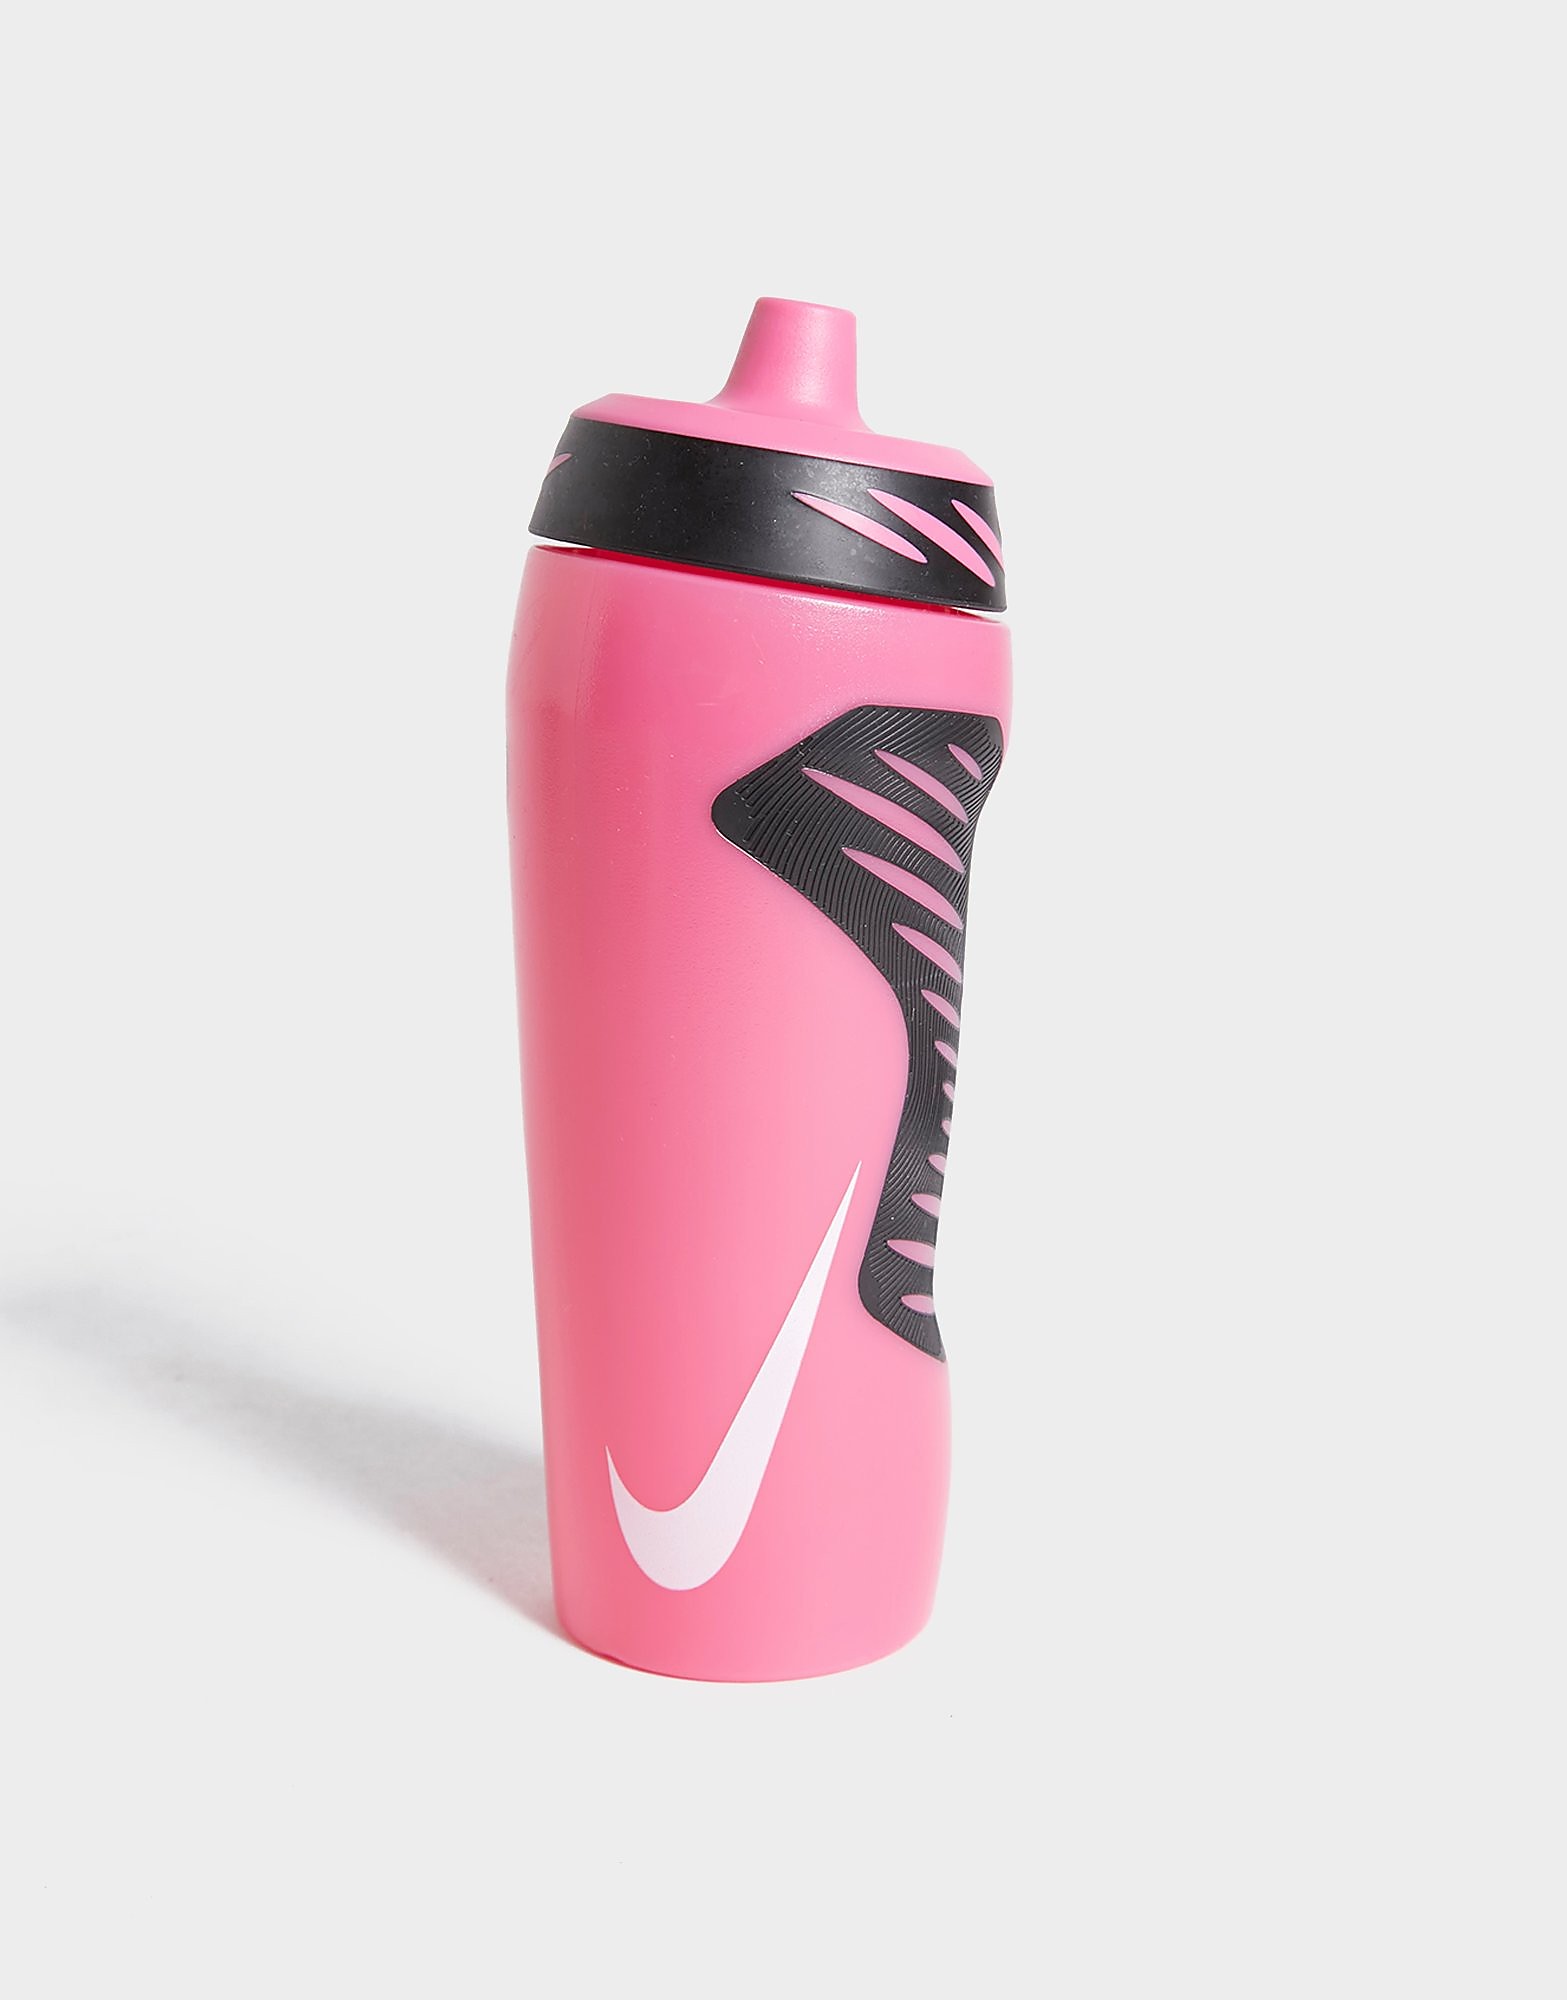 Nike hyperfuel-juomapullo (0,55 l) - mens, vaaleanpunainen, nike